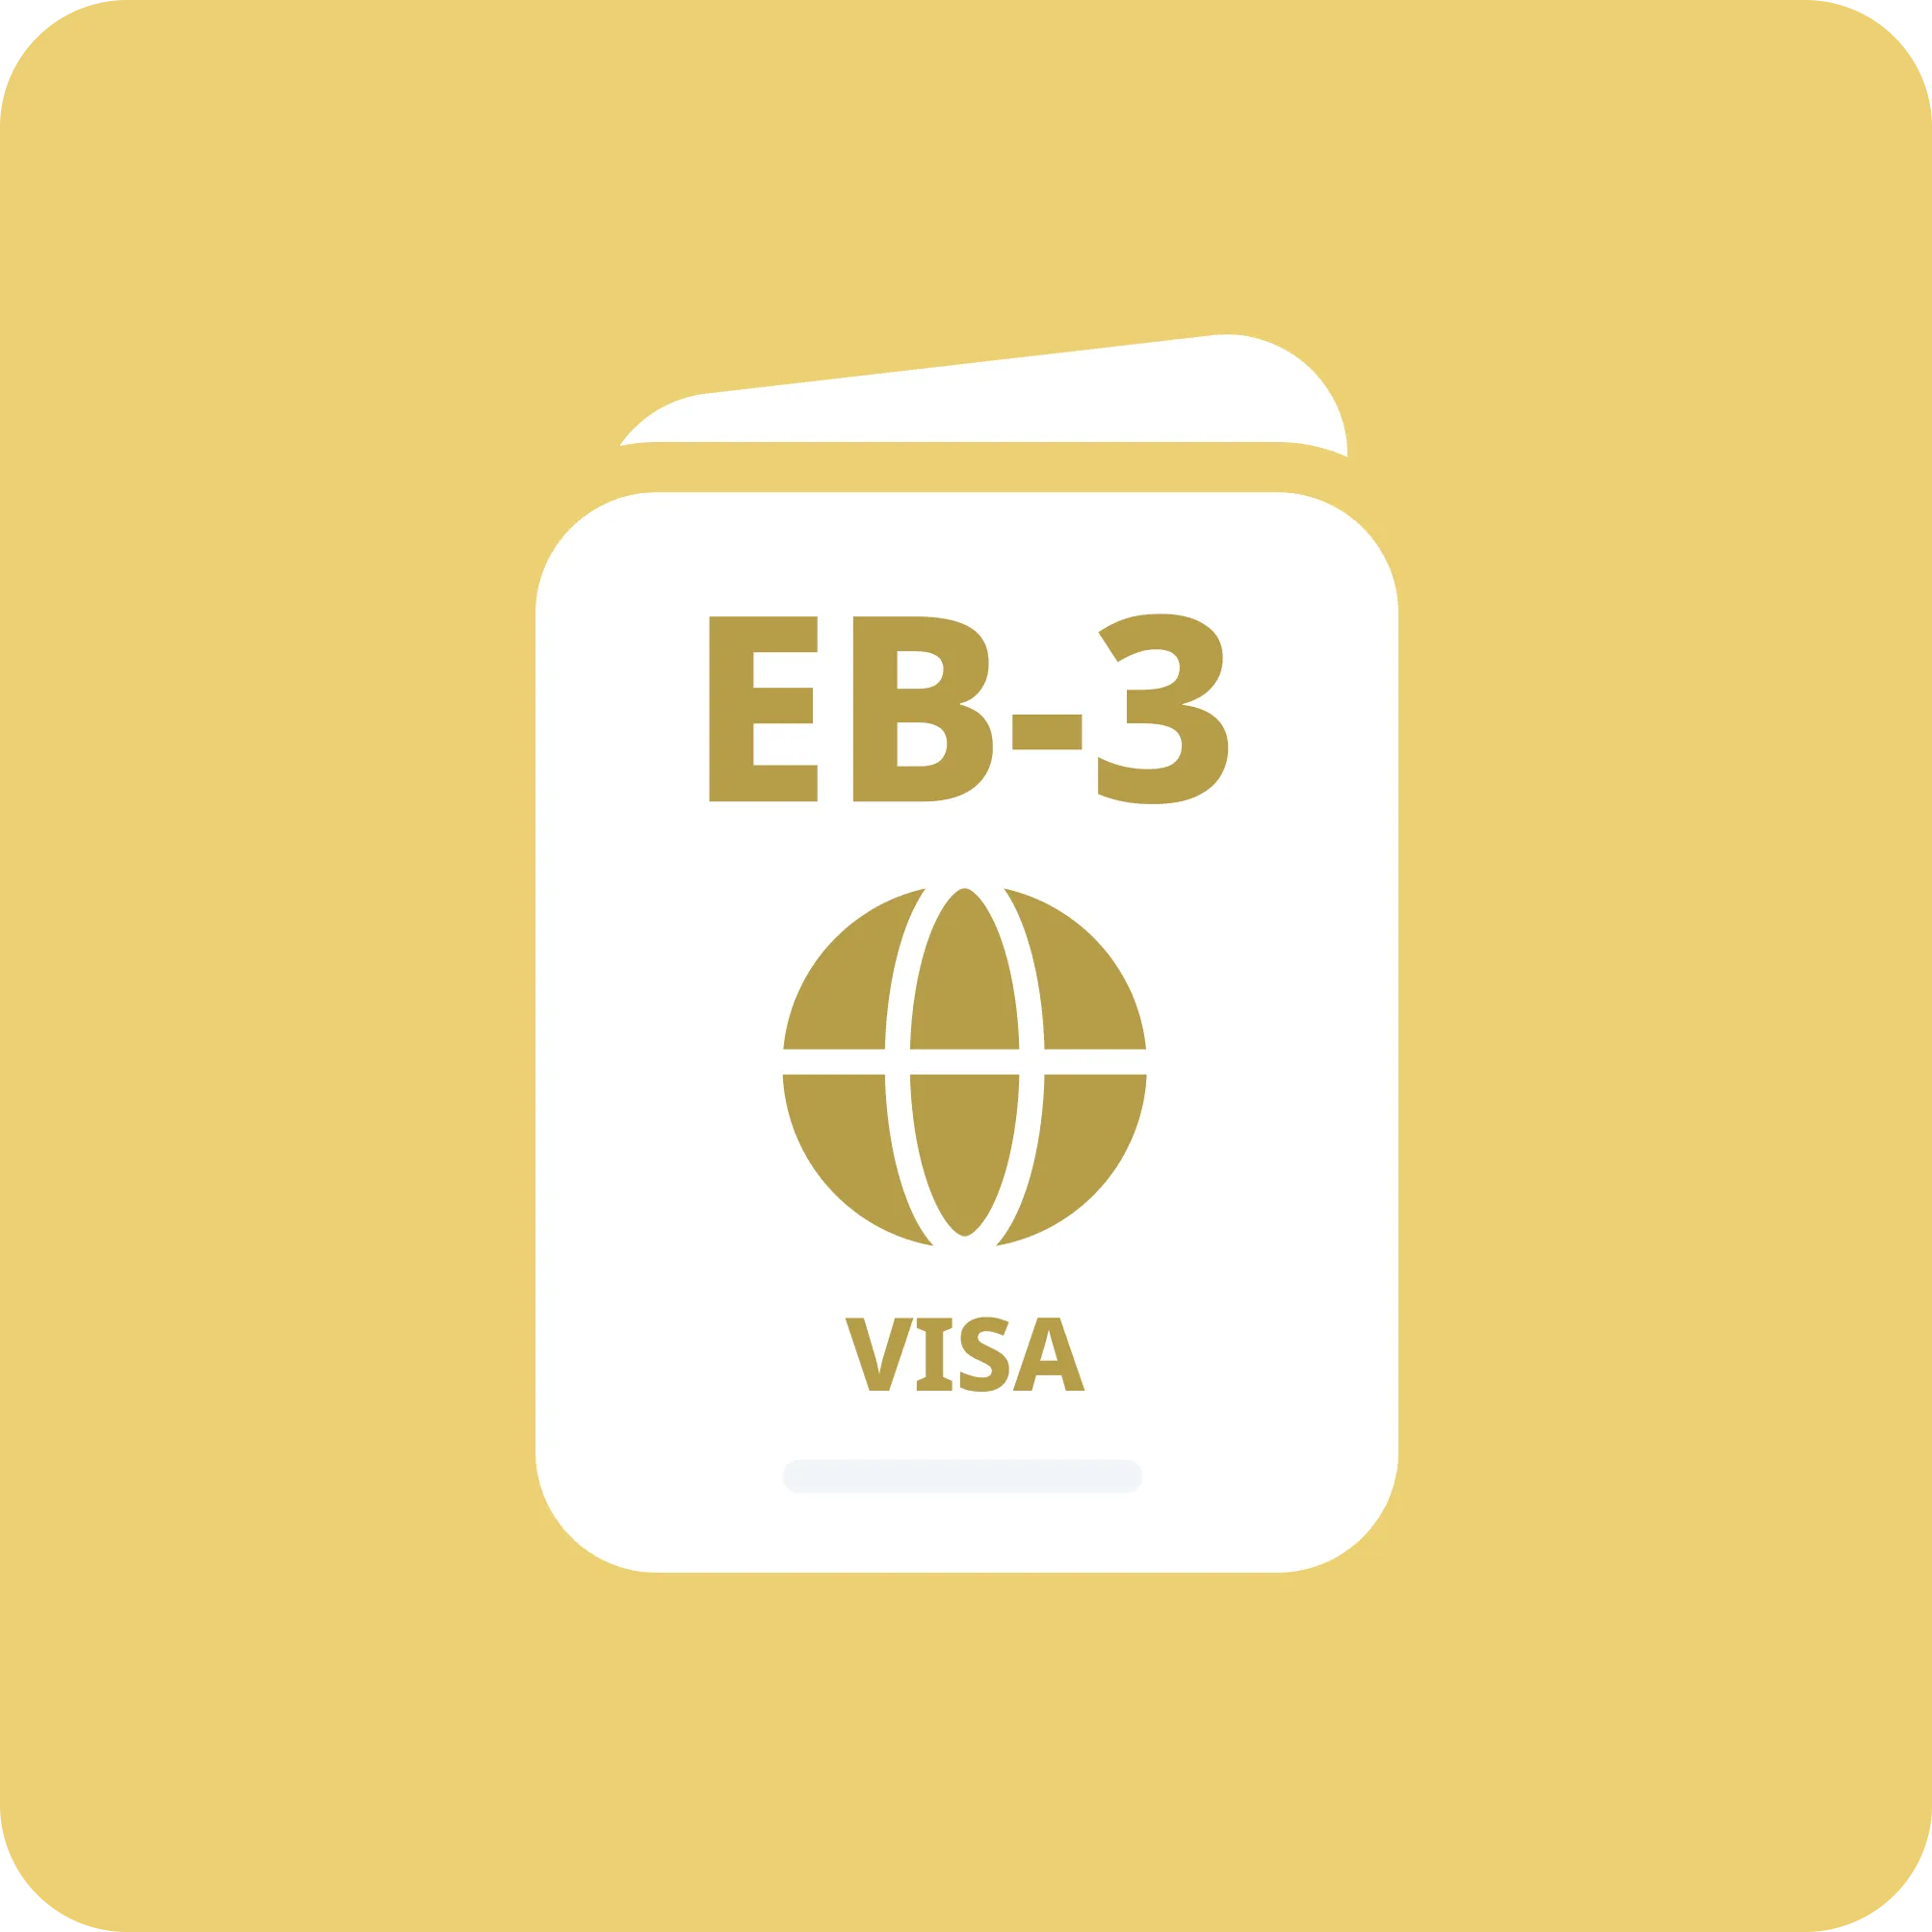 EB3 Green Card Checklist (Professional Worker)